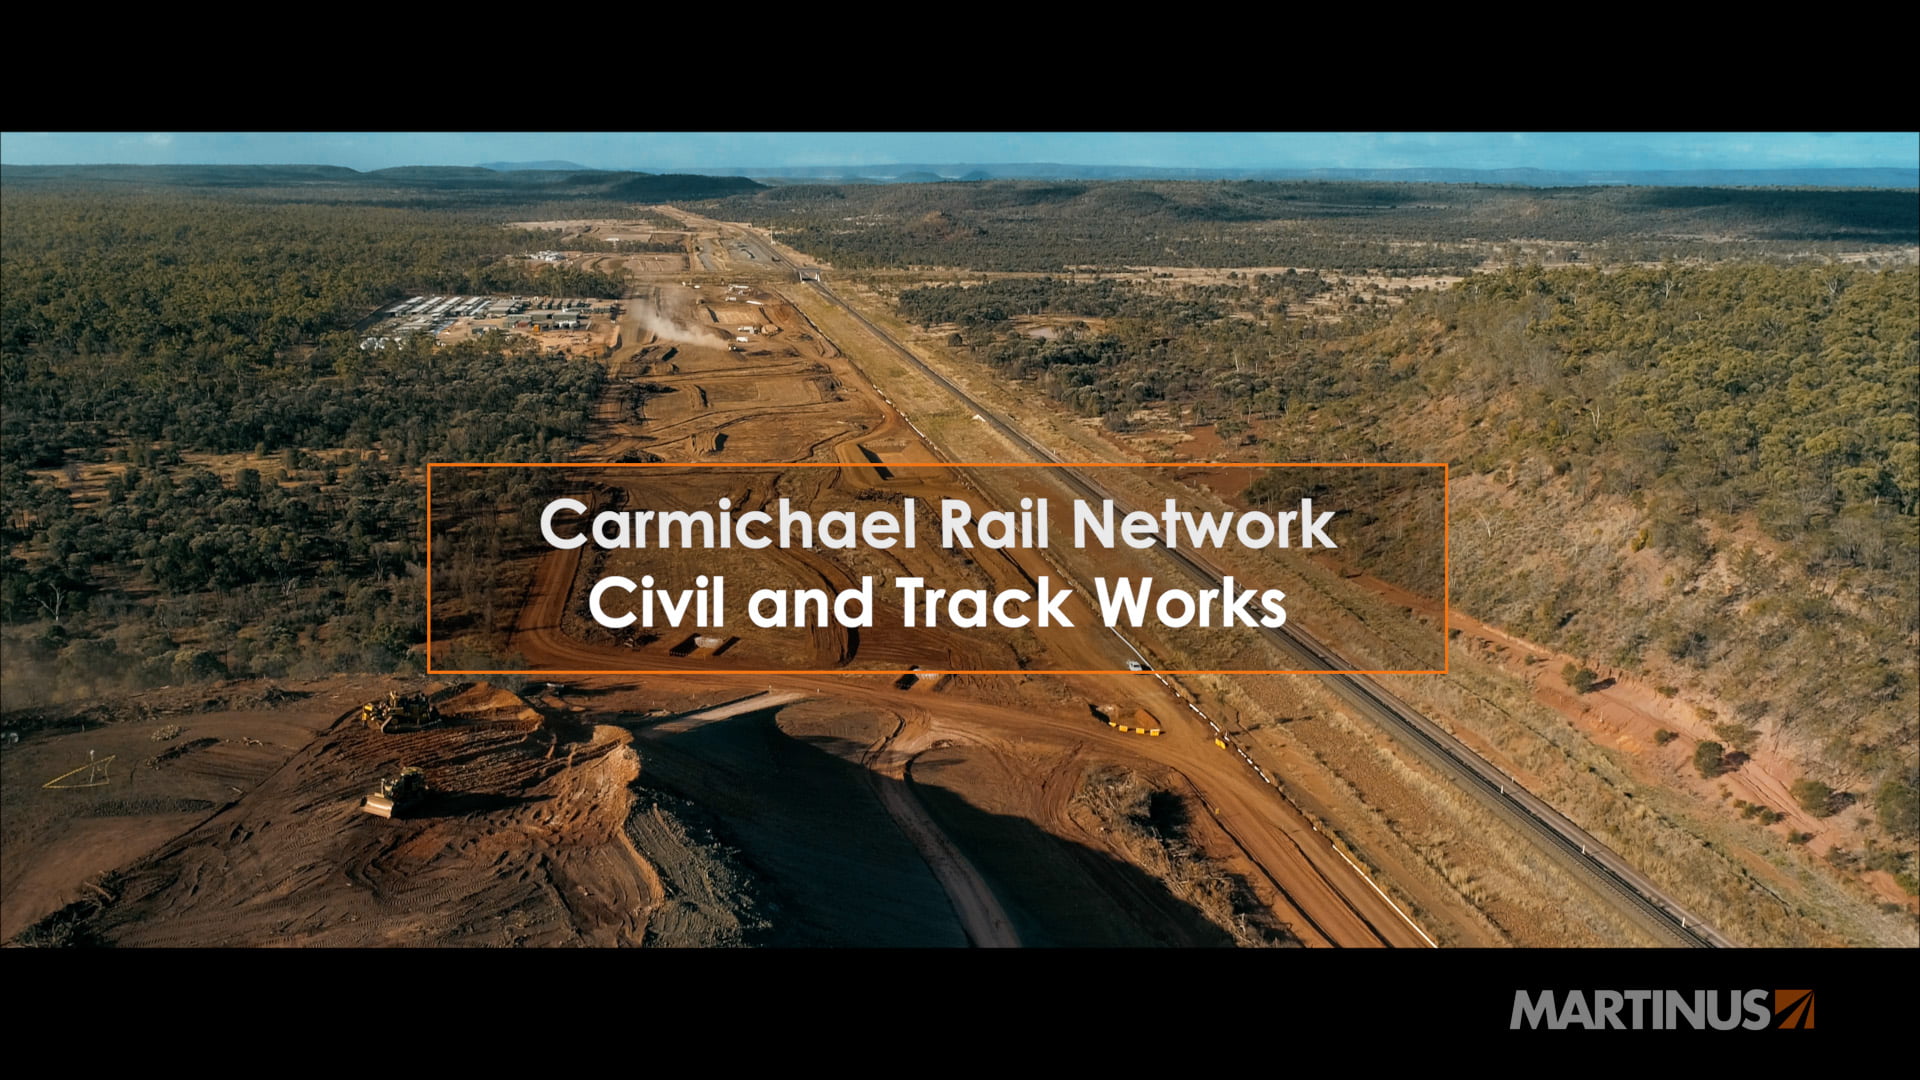 Martinus - Carmichael Rail Network - Civil and Track Works